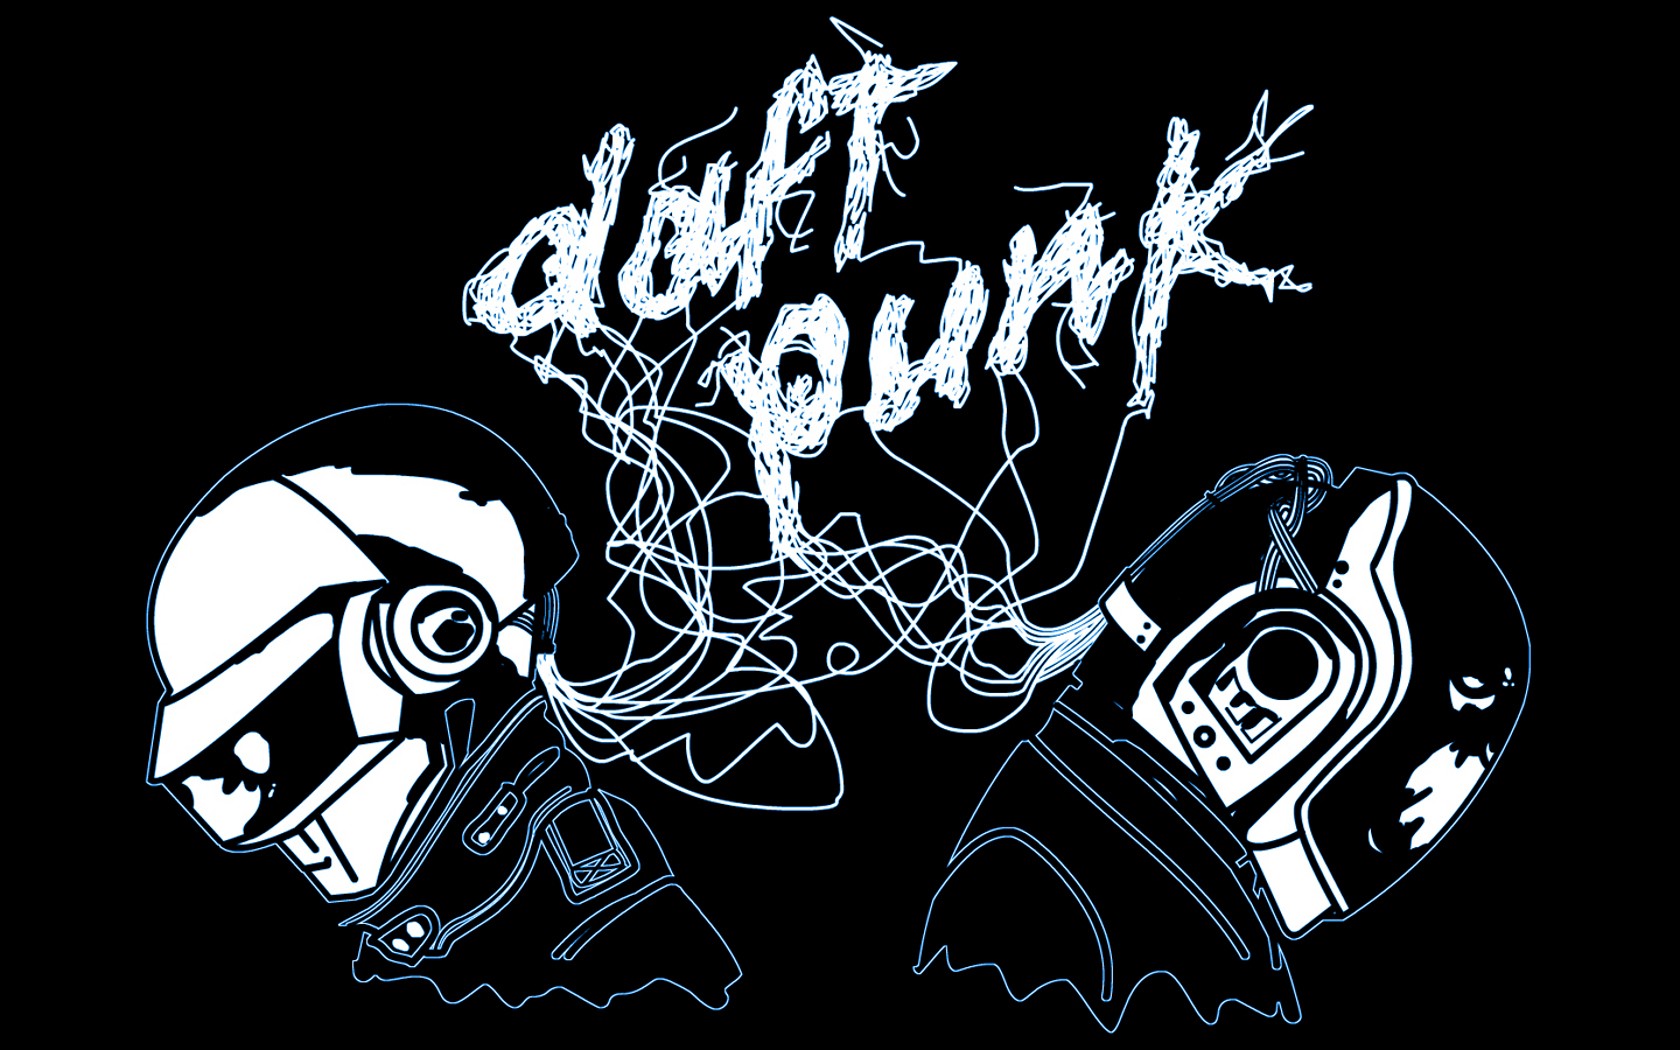 General 1680x1050 Daft Punk digital art music artwork simple background electronic music